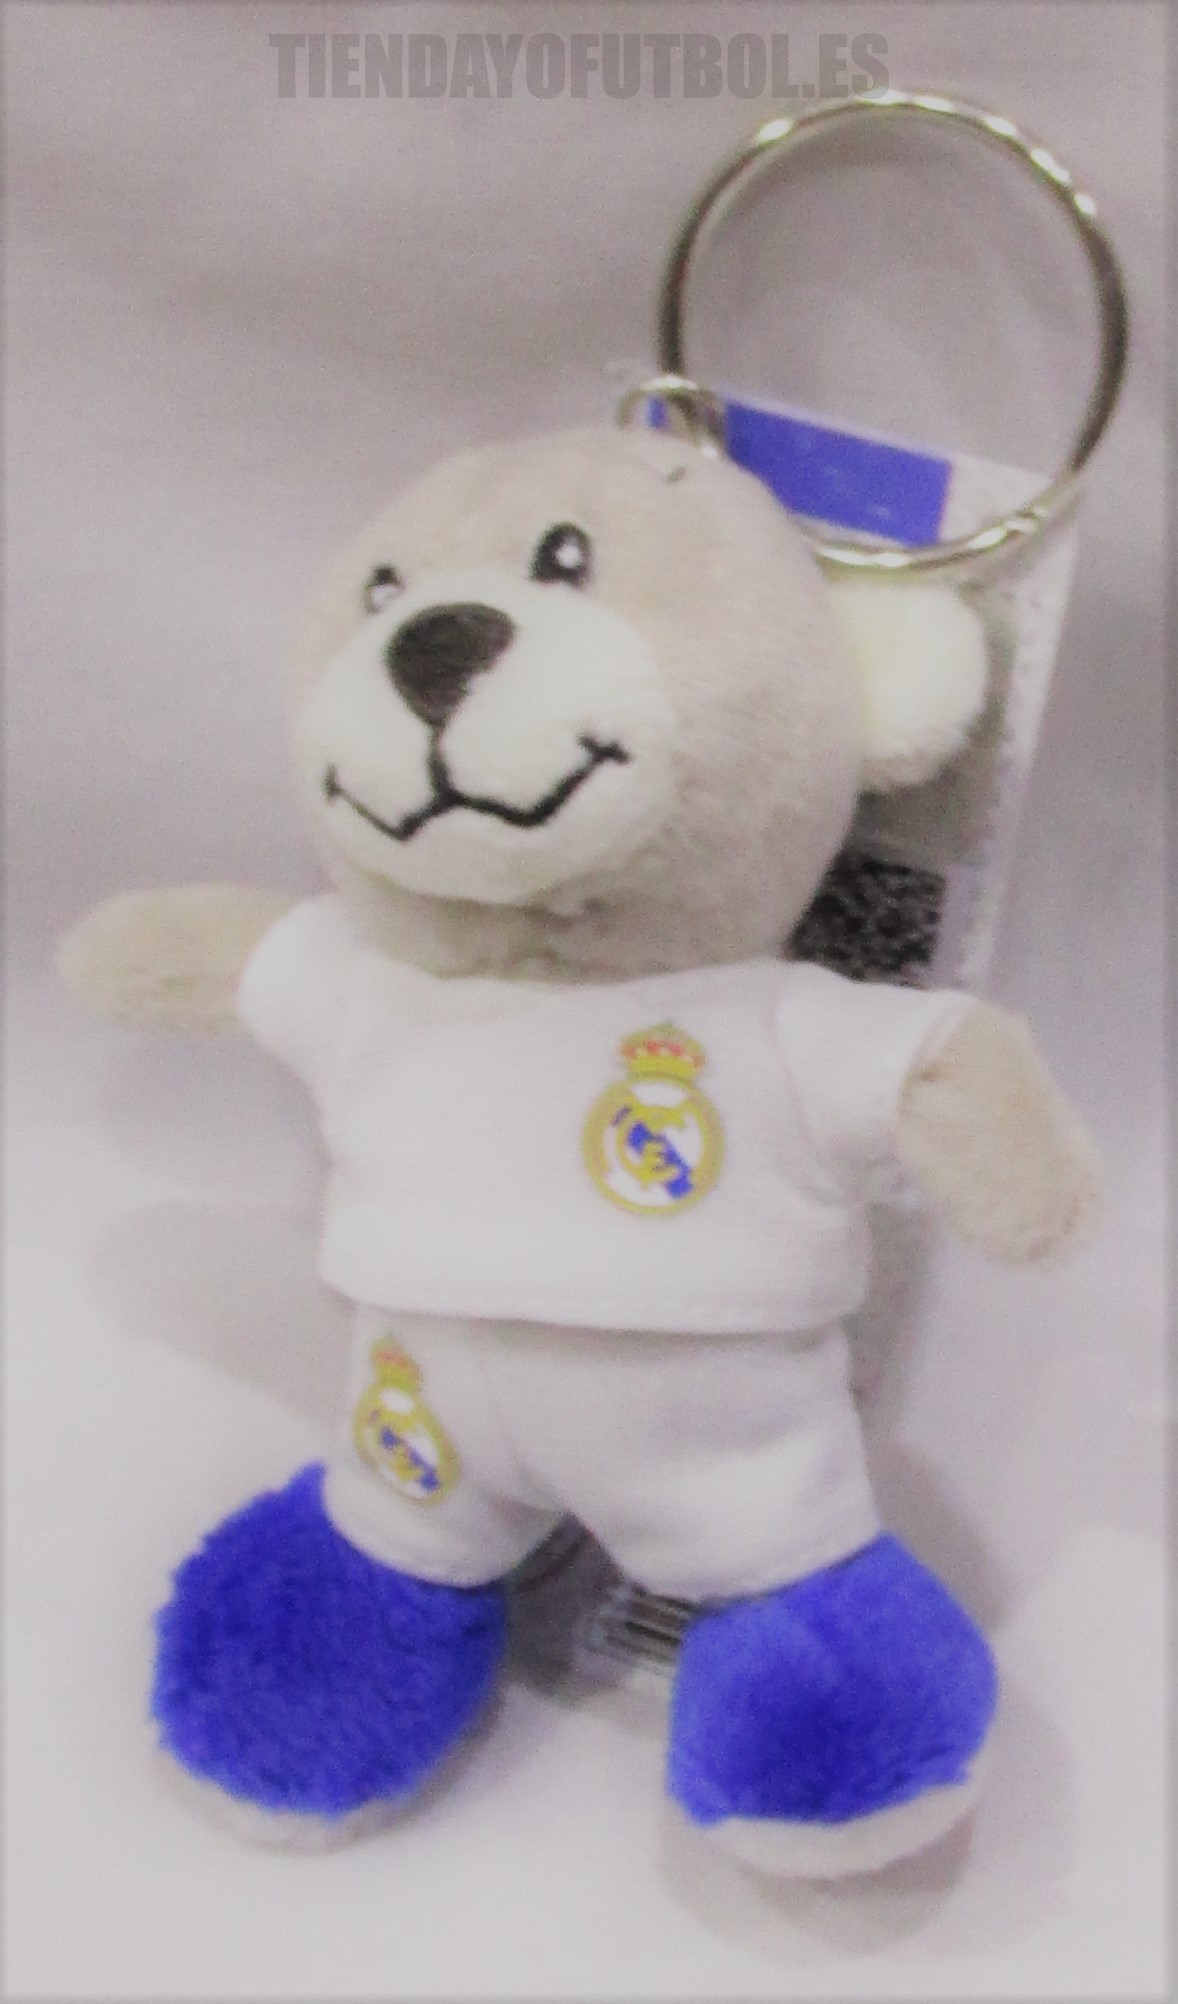 Real Madrid, Peluche Osito con Bufanda, Producto Oficial Real